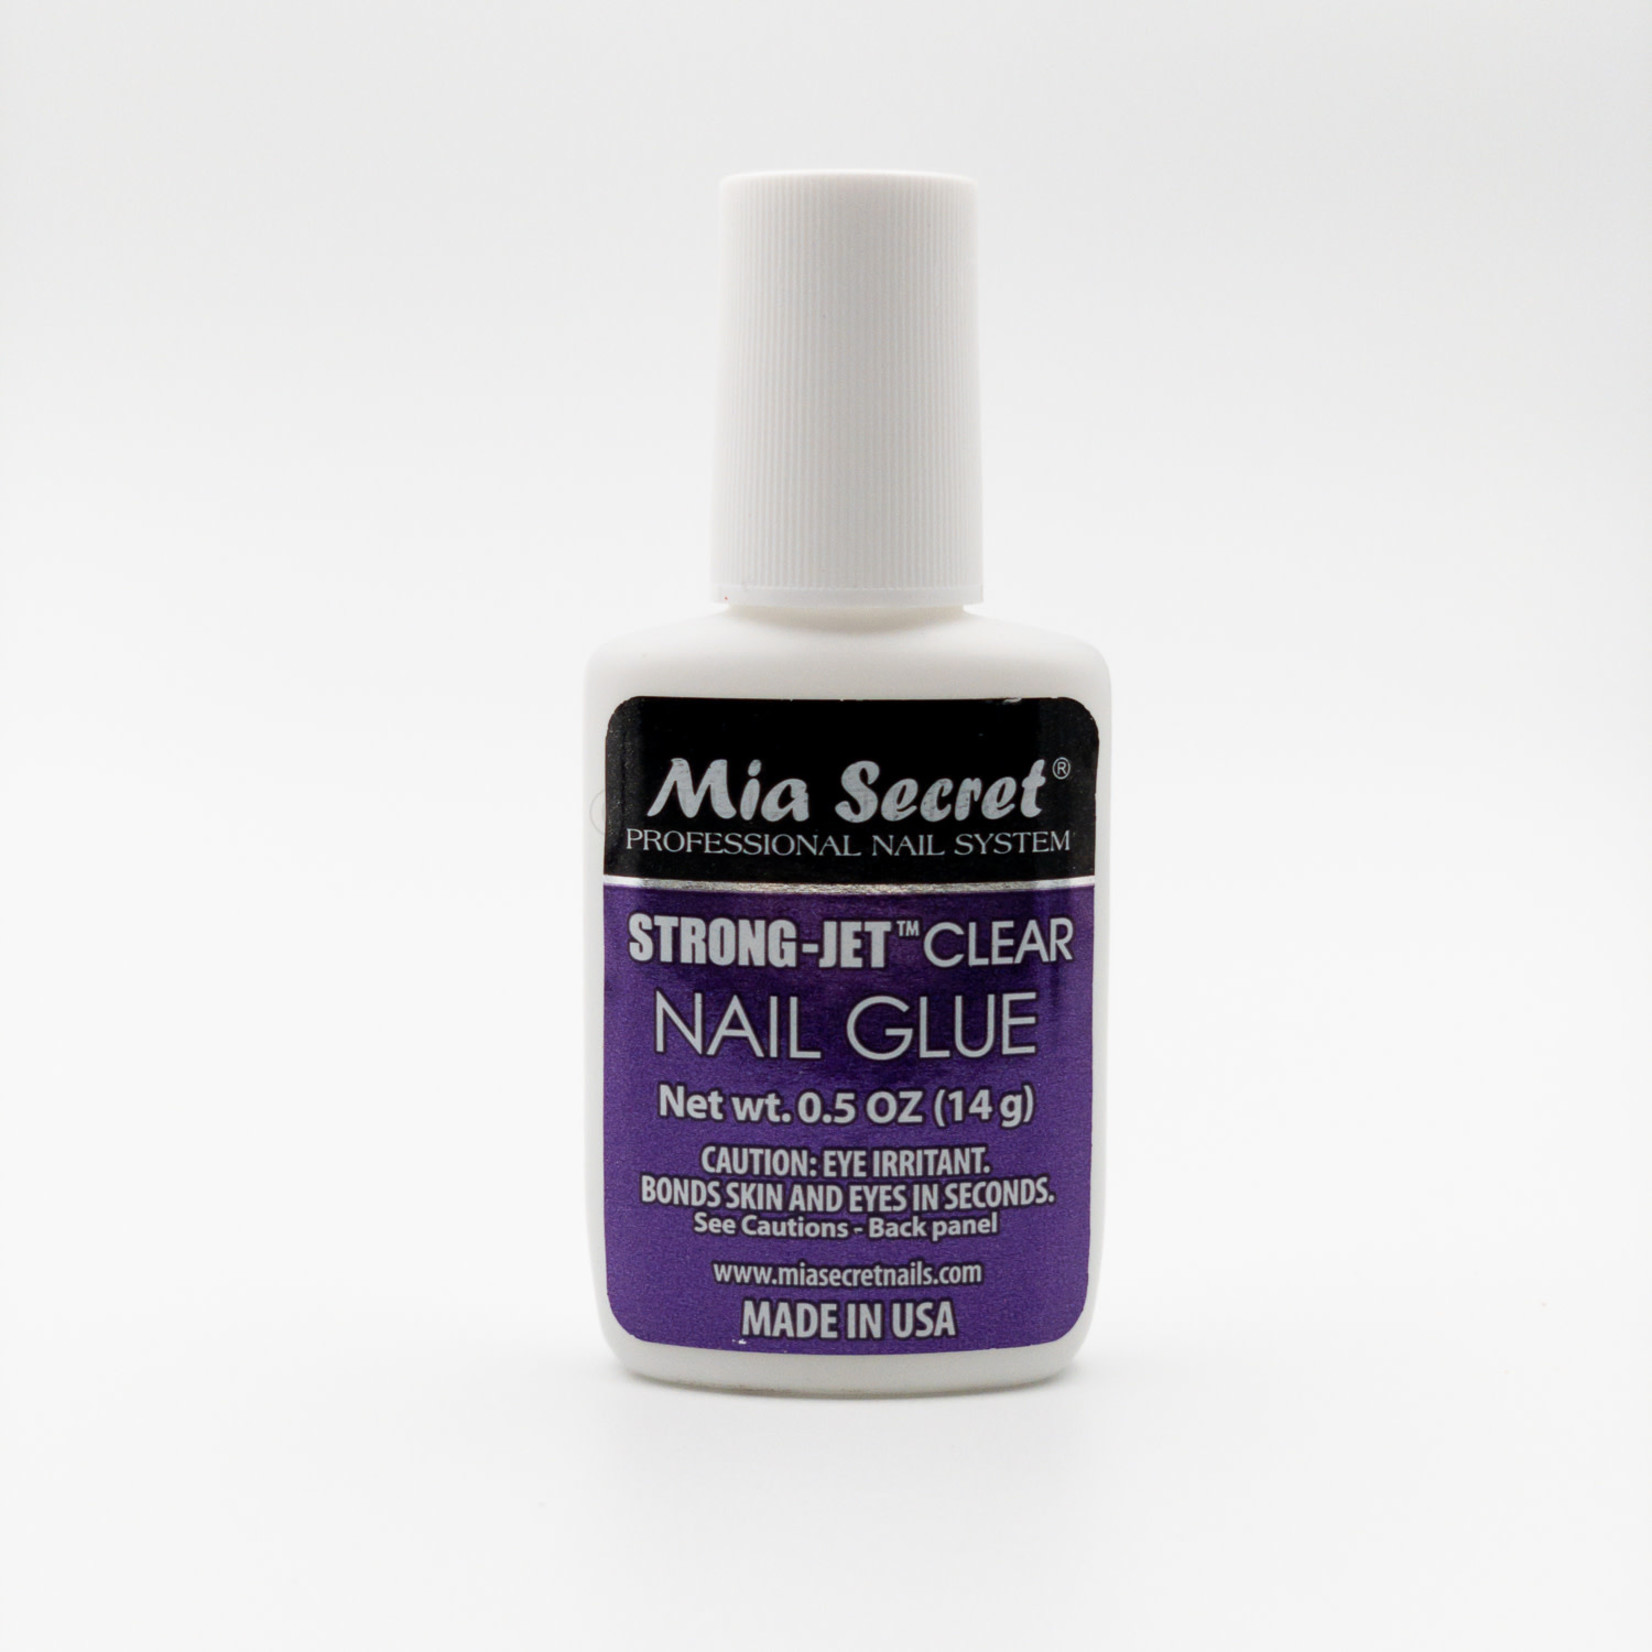 Mia Secret Mia Secret - Nail Glue - Strong Jet Clear -